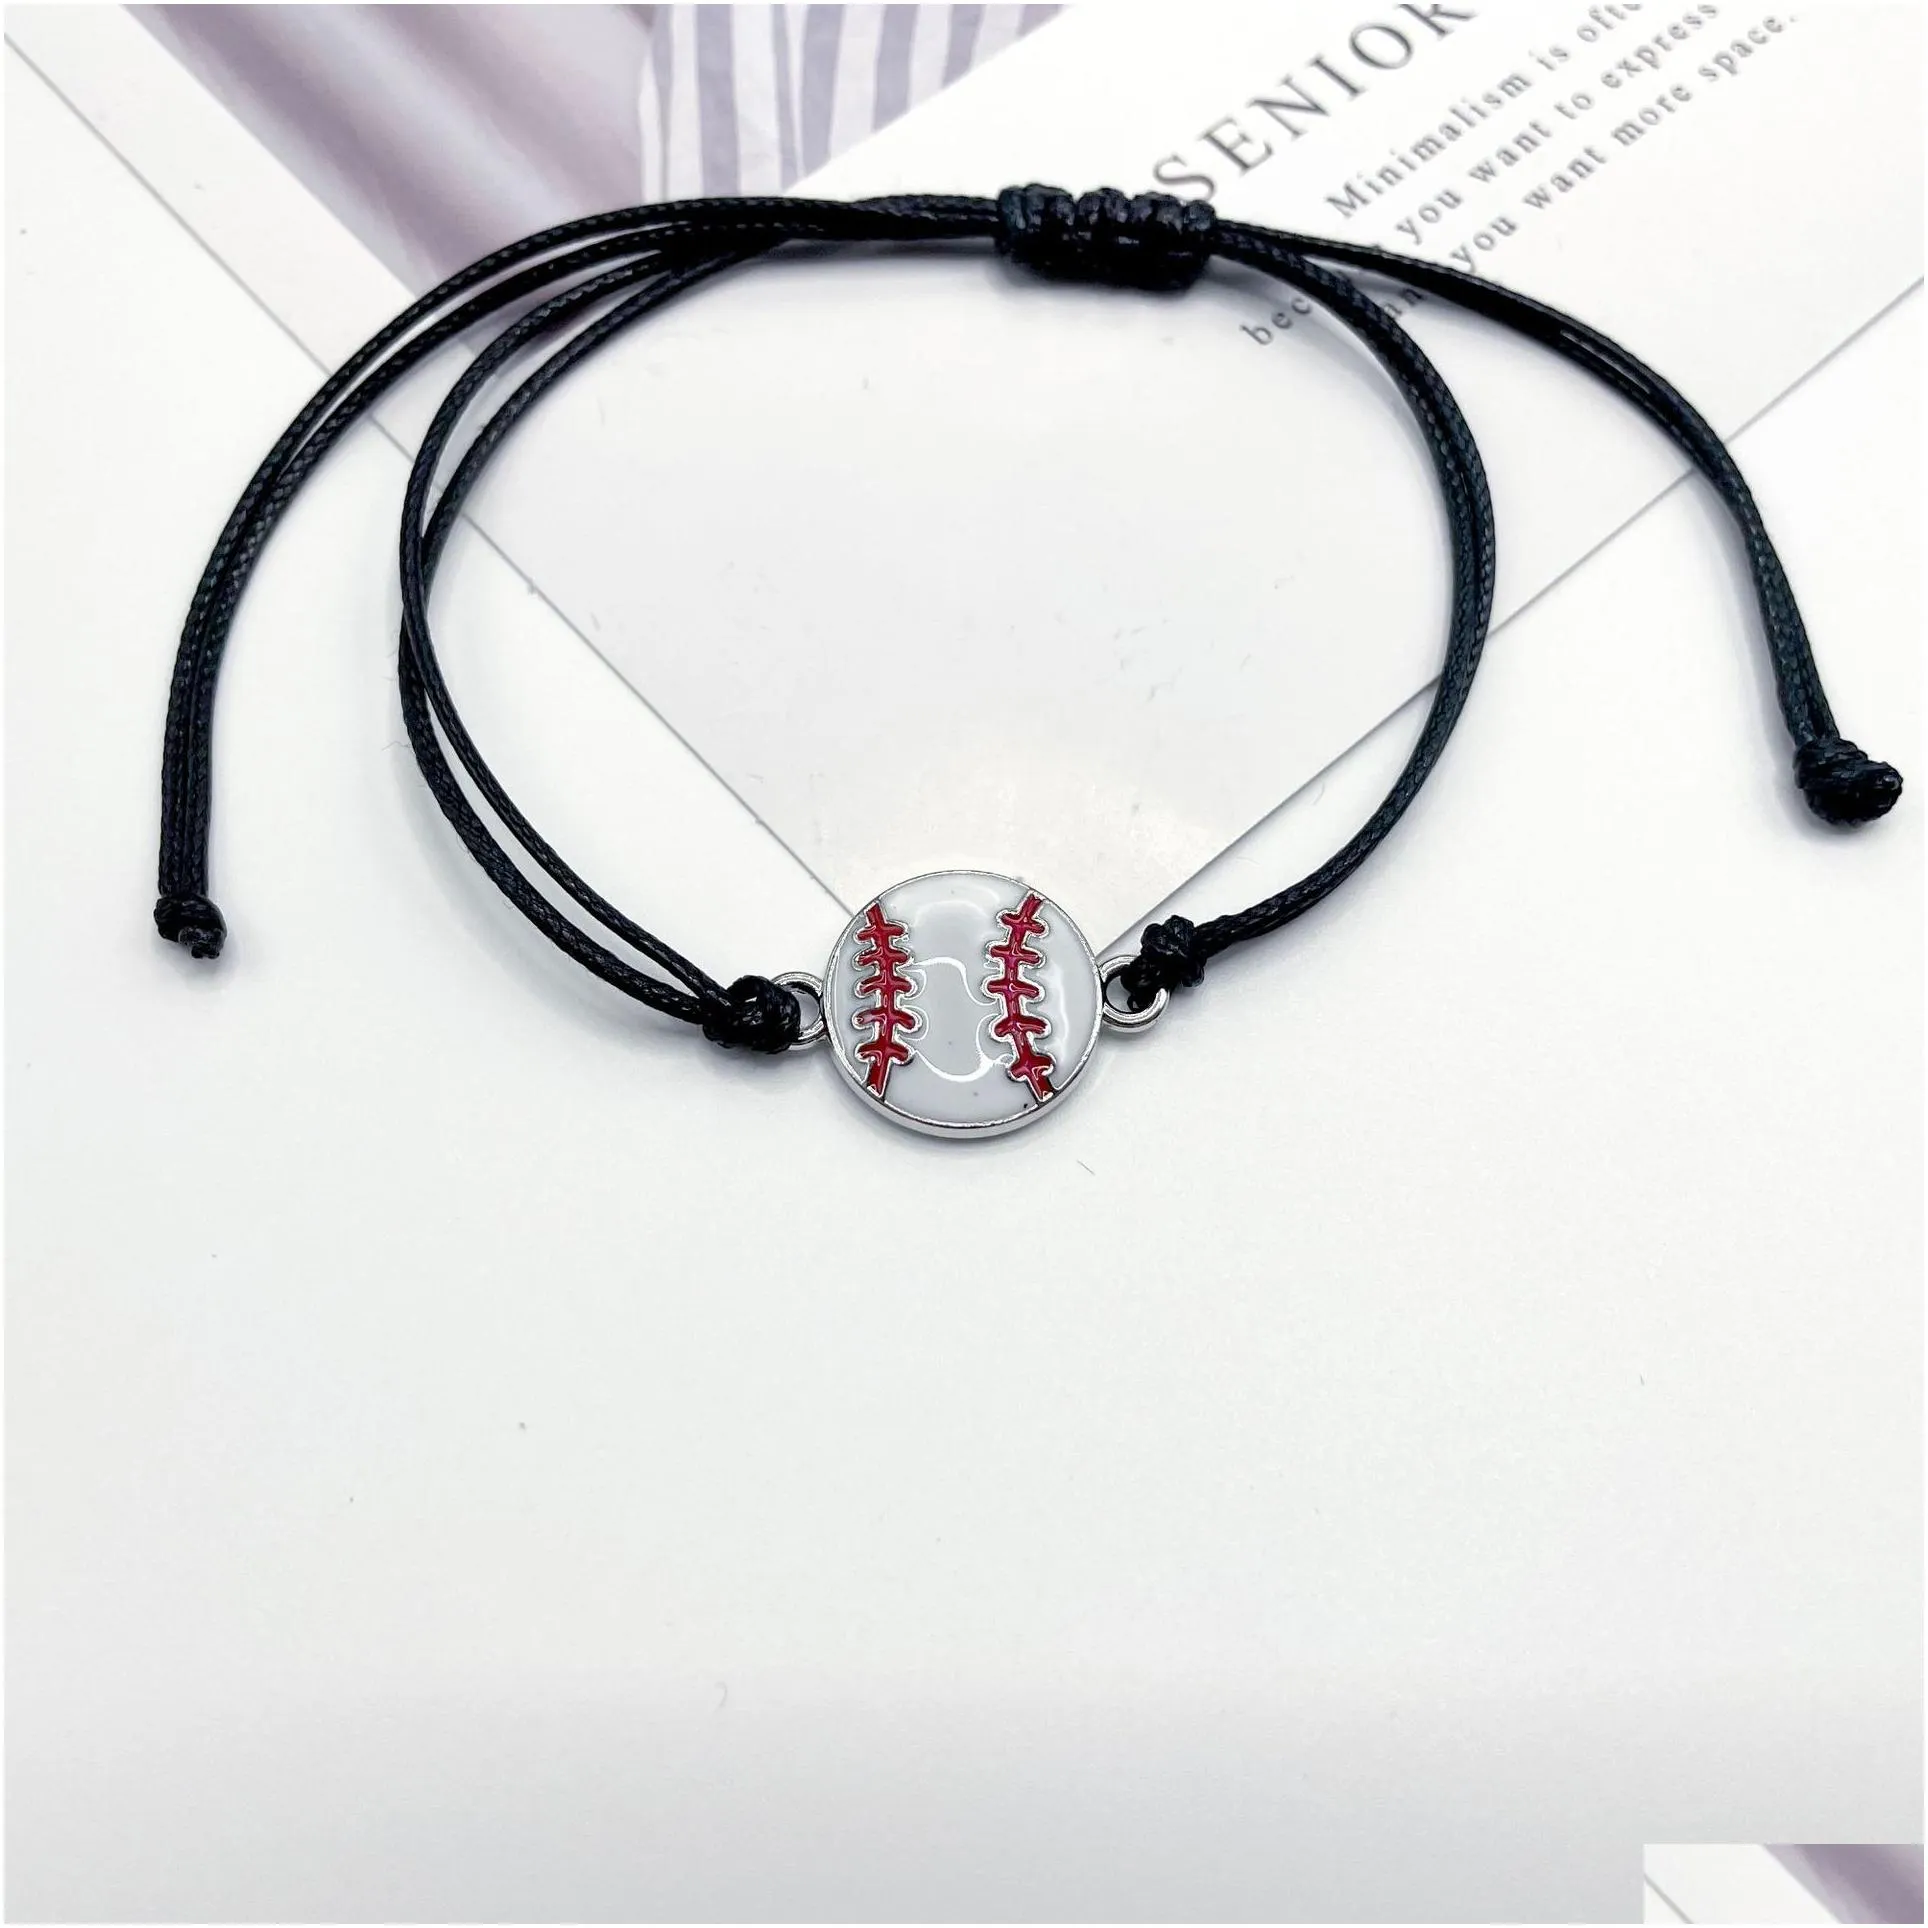 bulk price way thread hand-woven ball charm bracelet baseball football basketball team fan hand rope bracelets jewelry gift